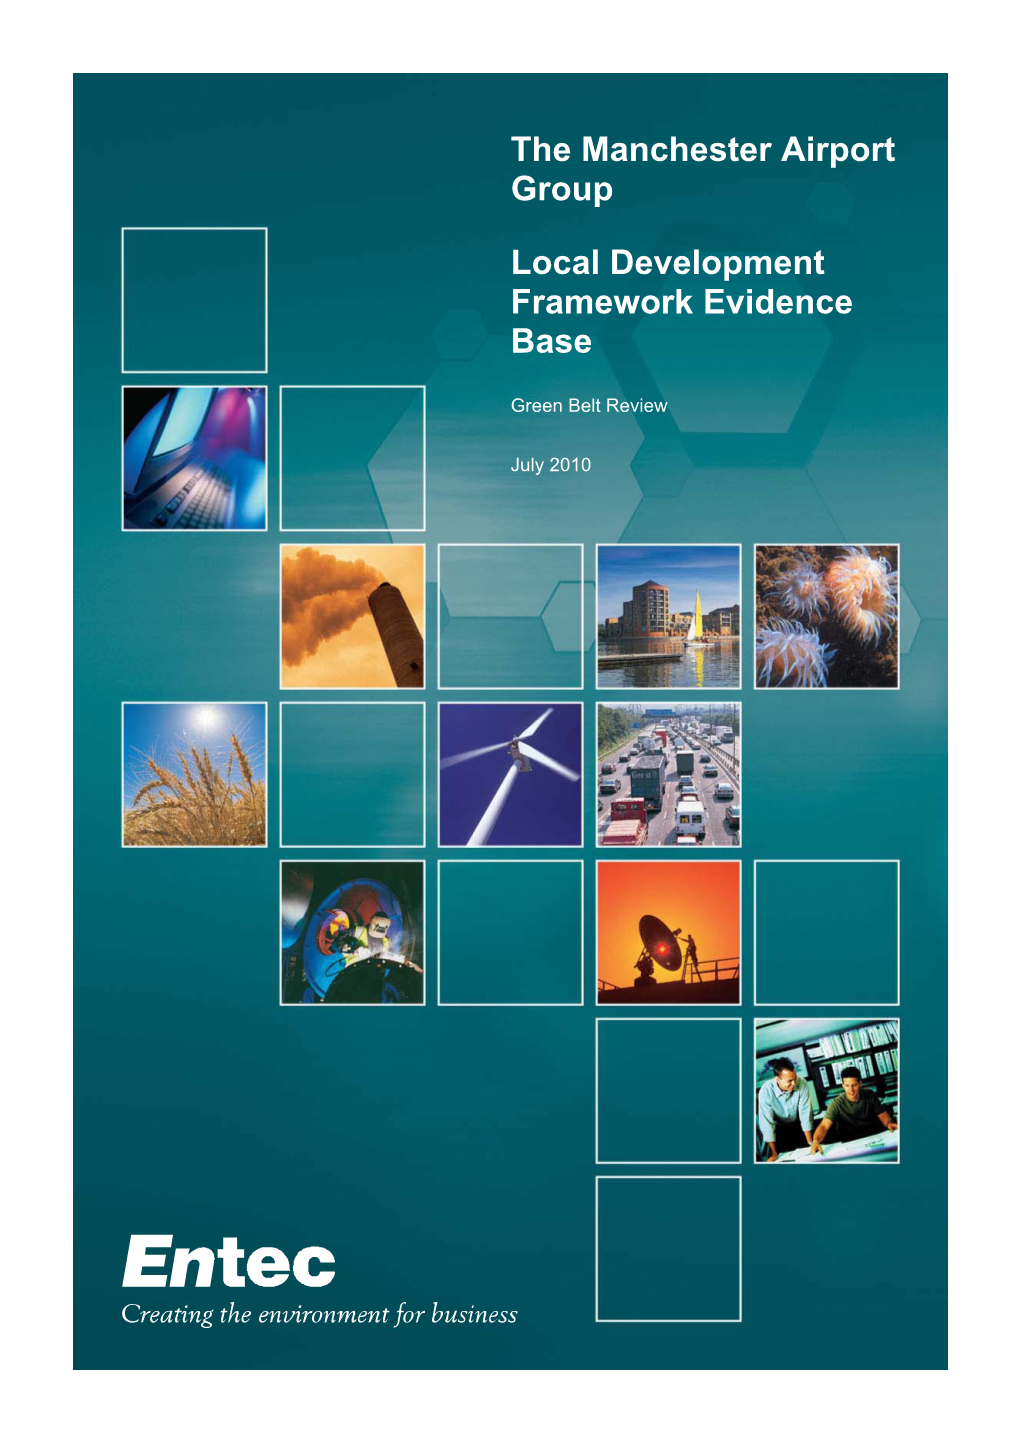 The Manchester Airport Group Local Development Framework Evidence